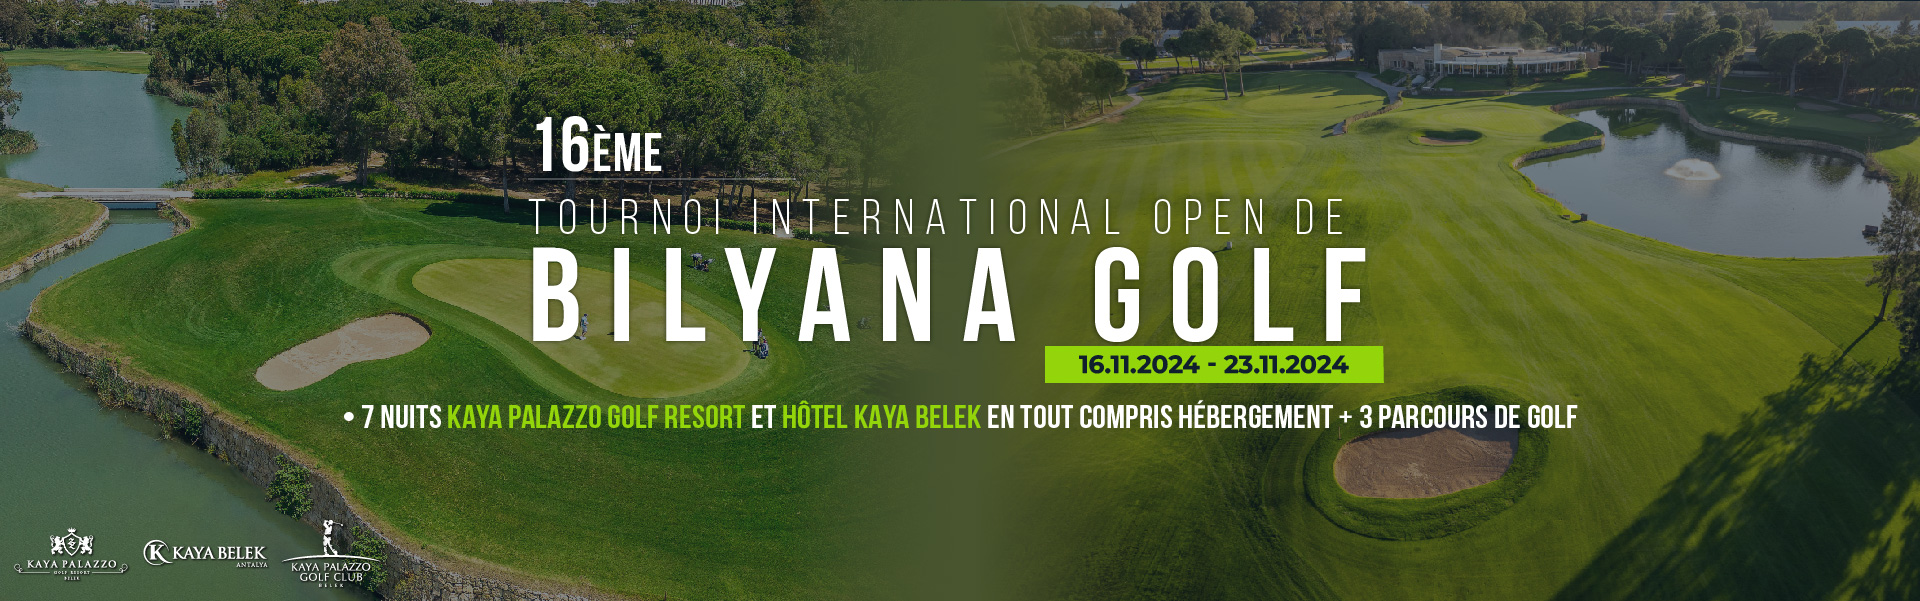 Bilyana Golf - 16ème TOURNOI INTERNATIONAL OPEN DE BILYANA GOLF